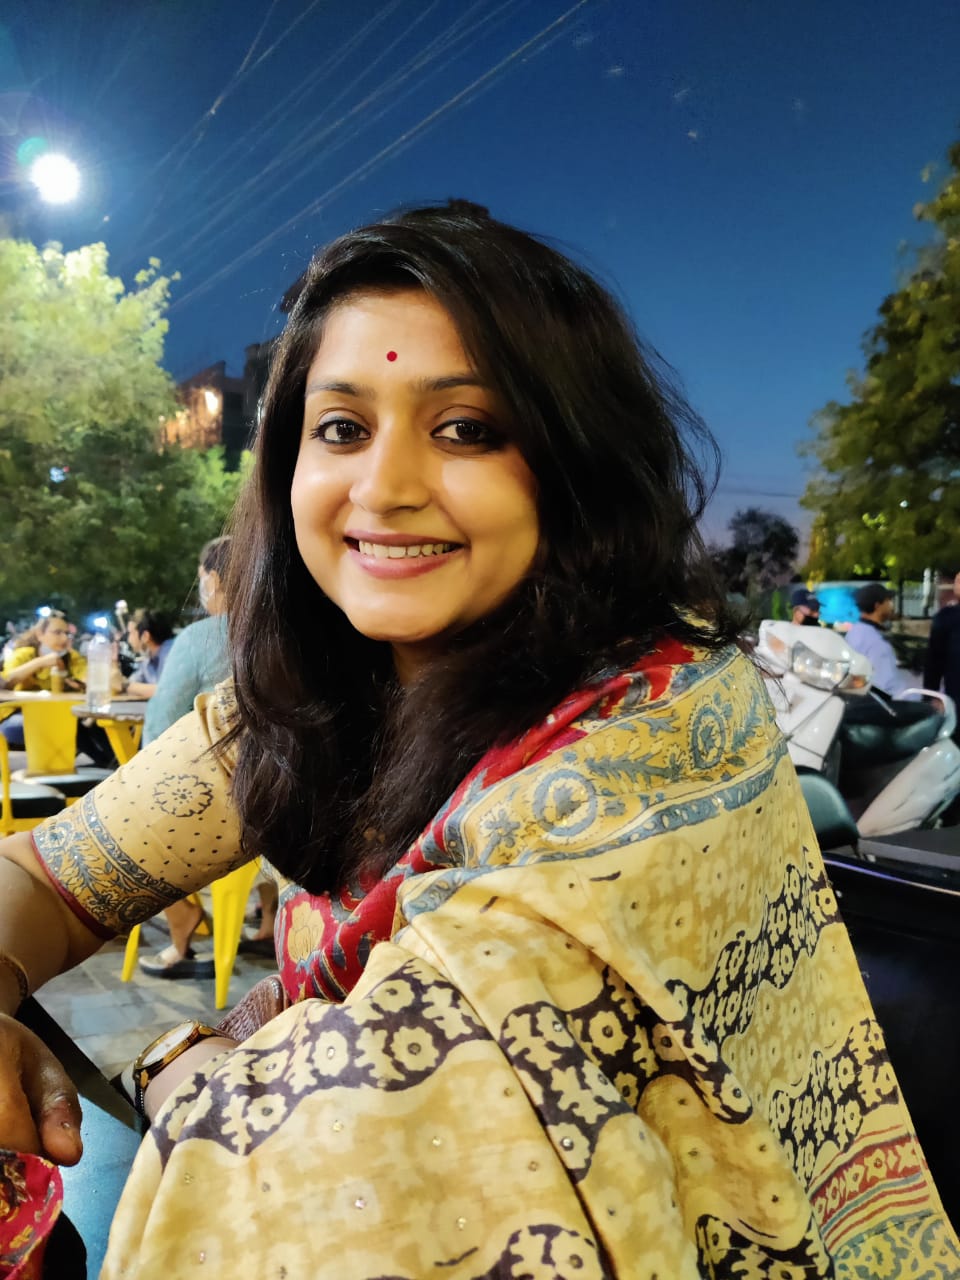 Jaipur-Based Social Entrepreneur Saloni Sancheti named in this year’s Forbes 30-under-30